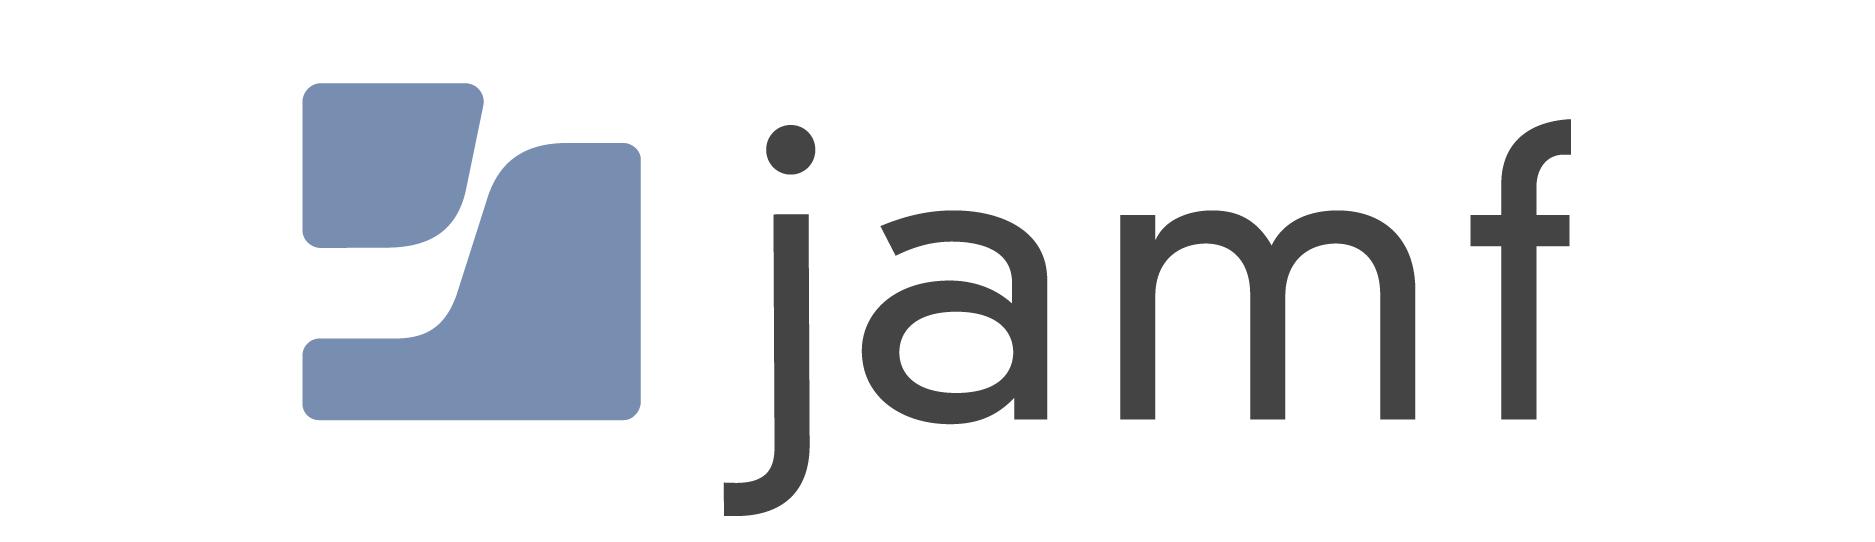 JAMF logo